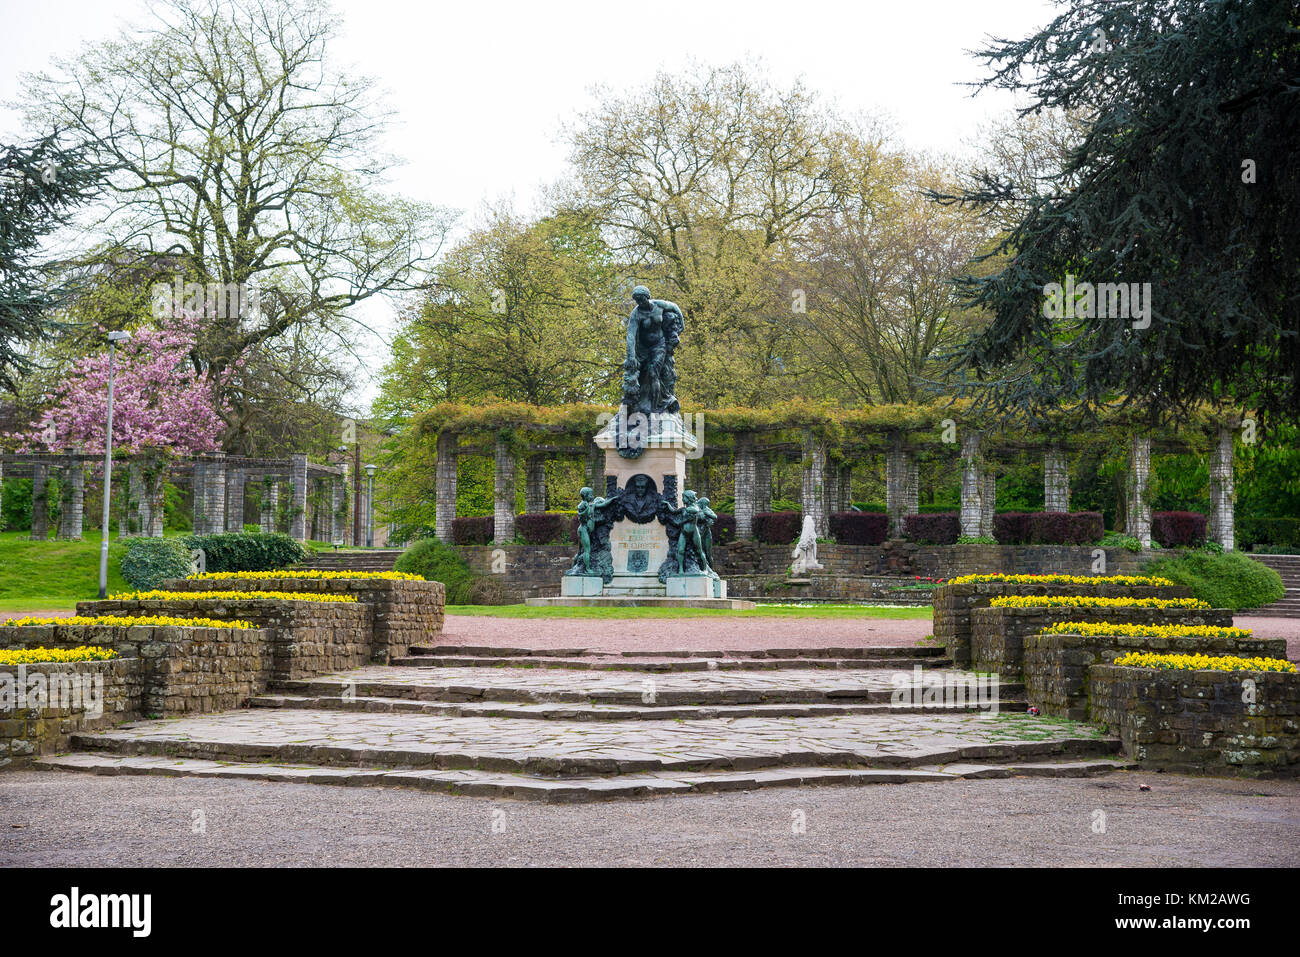 Gent, Belgien - 16 April 2017: Skulptur im citadelpark ist ein Park in der belgischen Stadt Gent. Stockfoto